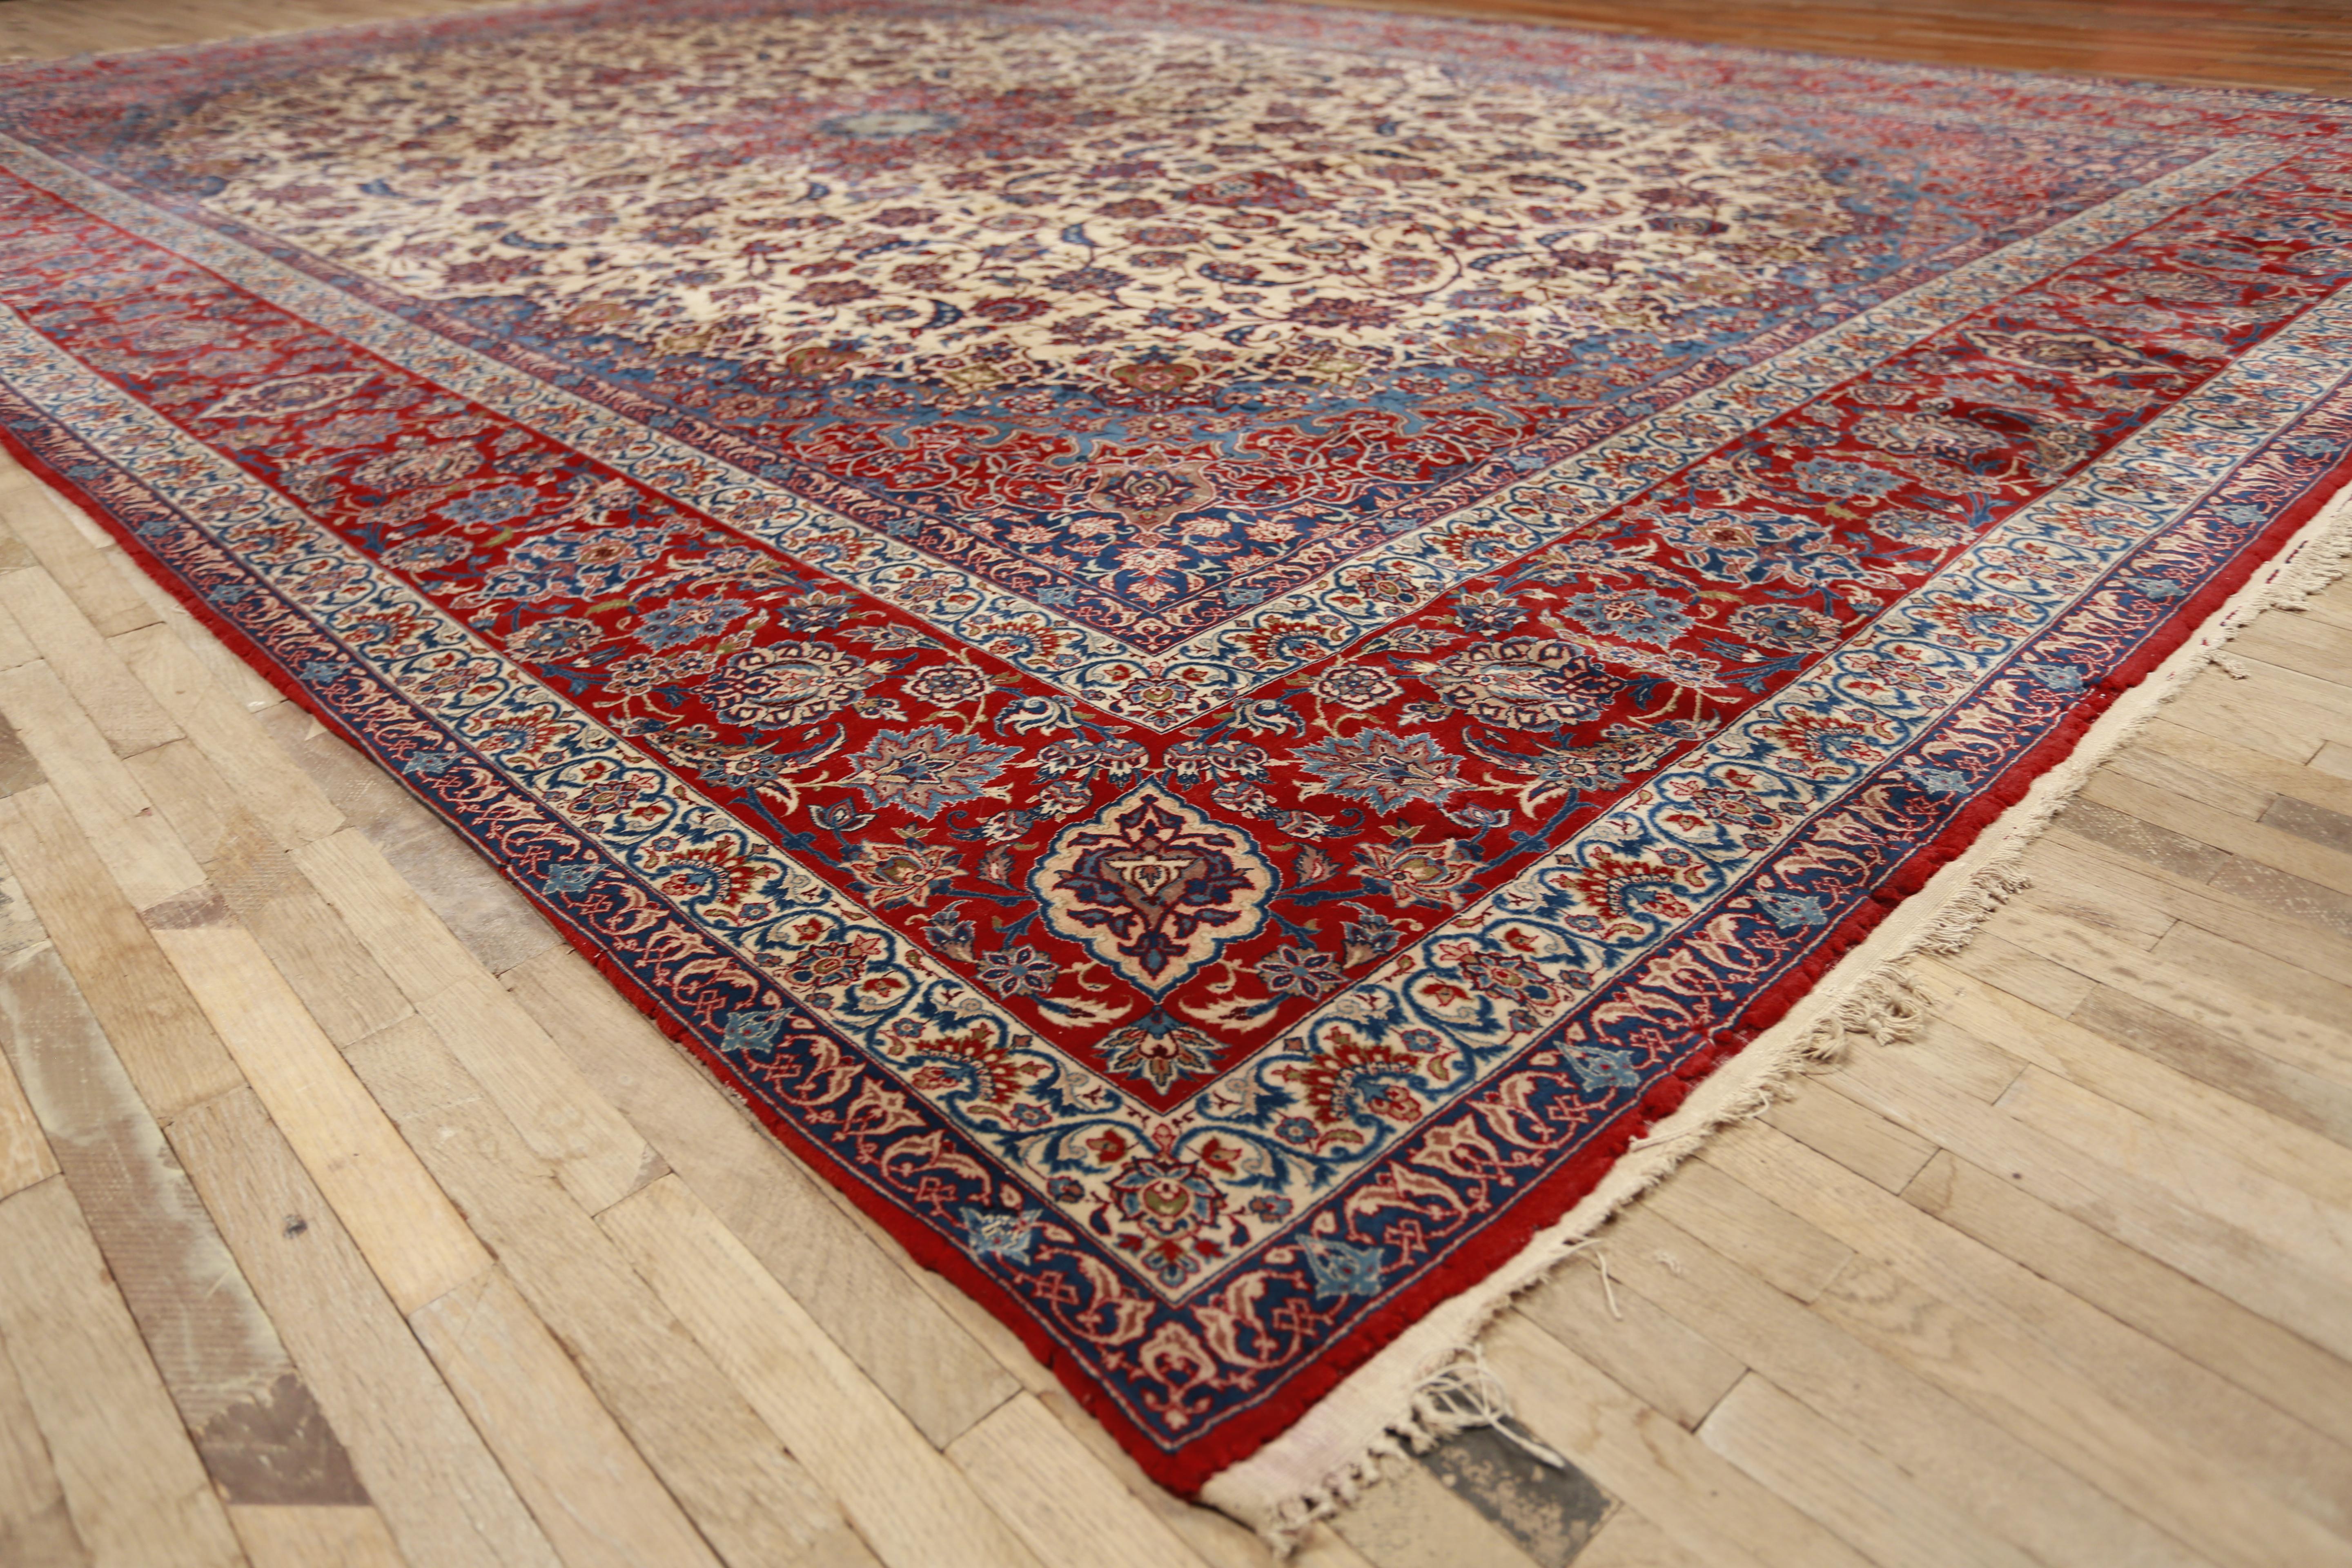 Isfahan Persian carpet 400 X 260 cm million knots per m2 For Sale 6